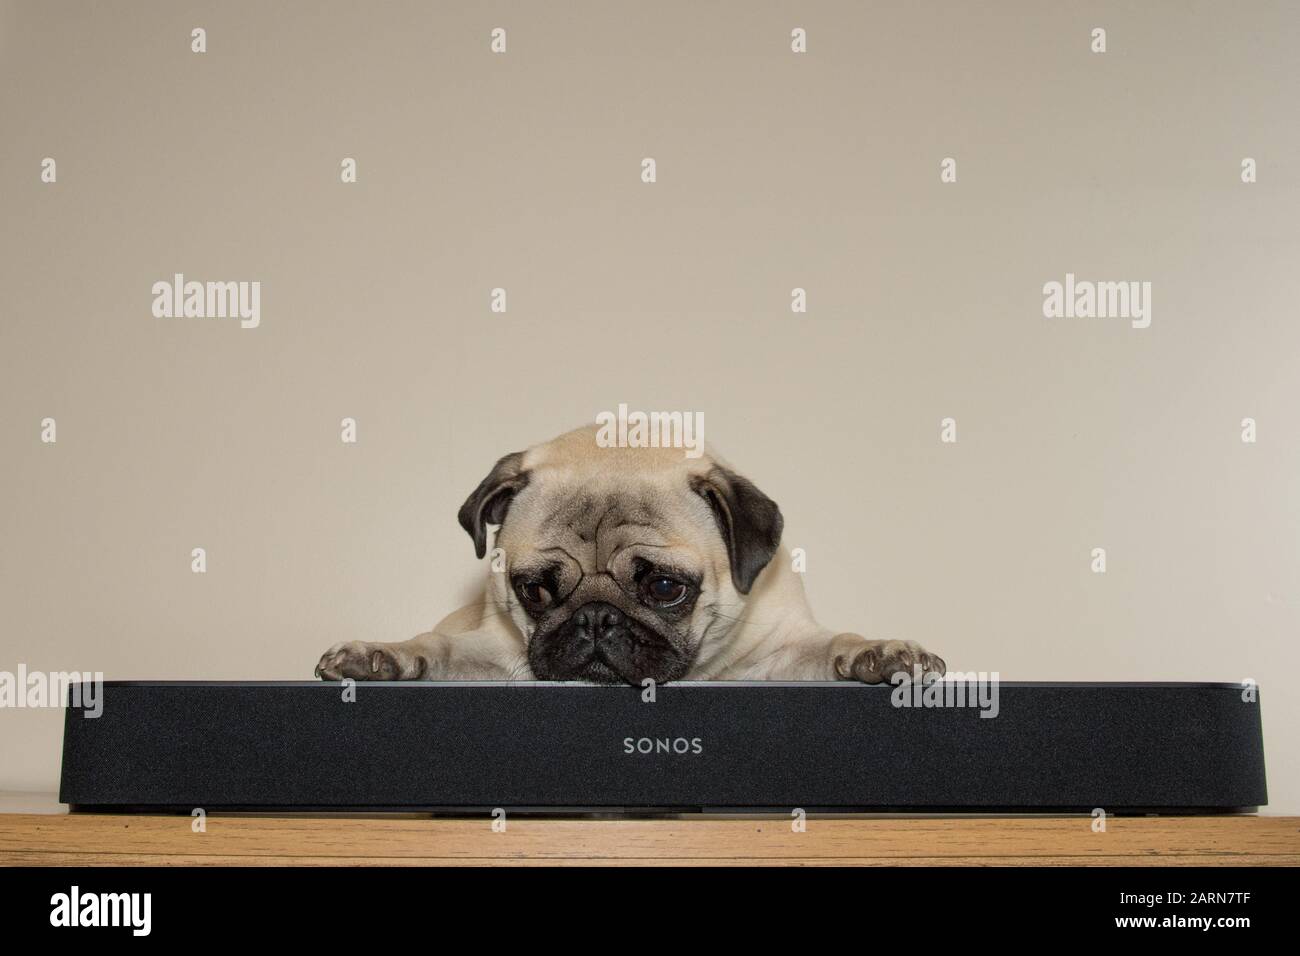 Pug dog sitting behind a Sonos beam sound bar against a light background Stock Photo